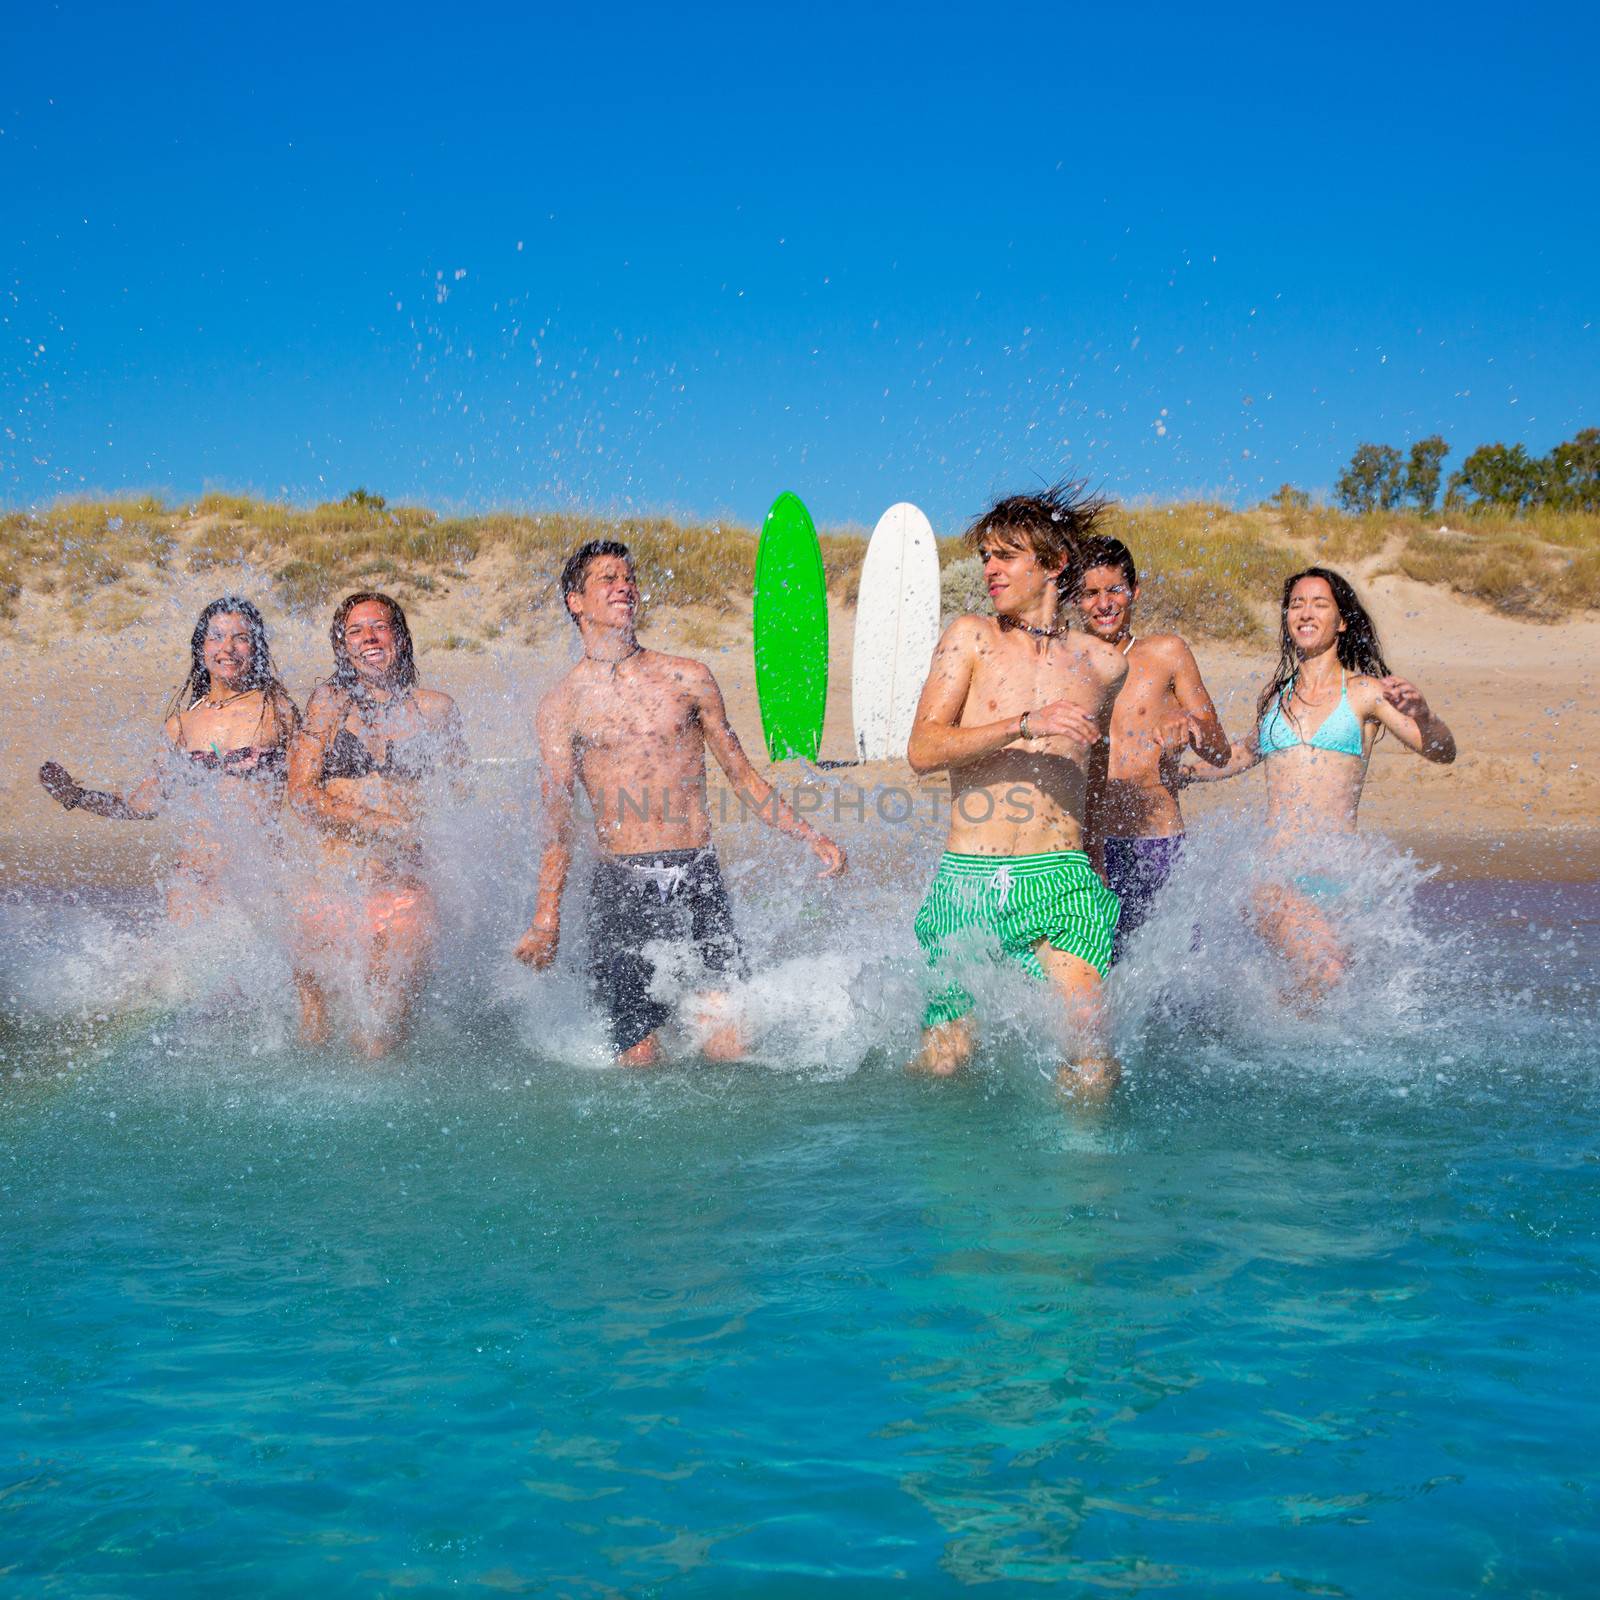 Teen surfers boys and girls group running happy to the beach splashing water